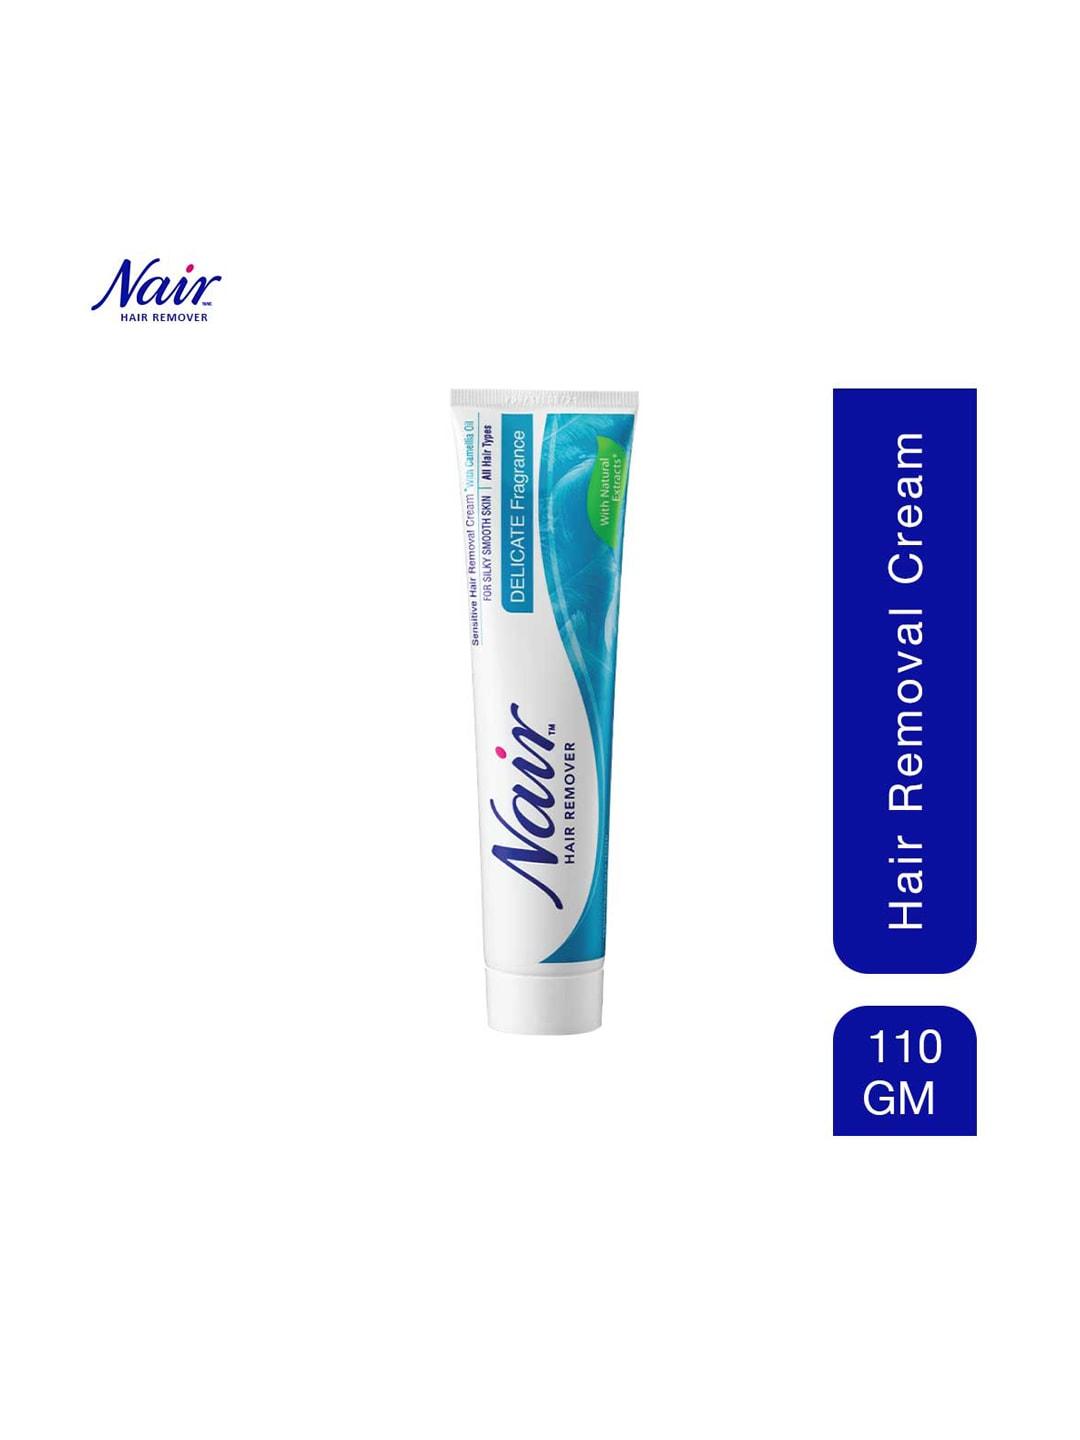 Nair Sensitive Hair Removal Delicate Cream 110 g